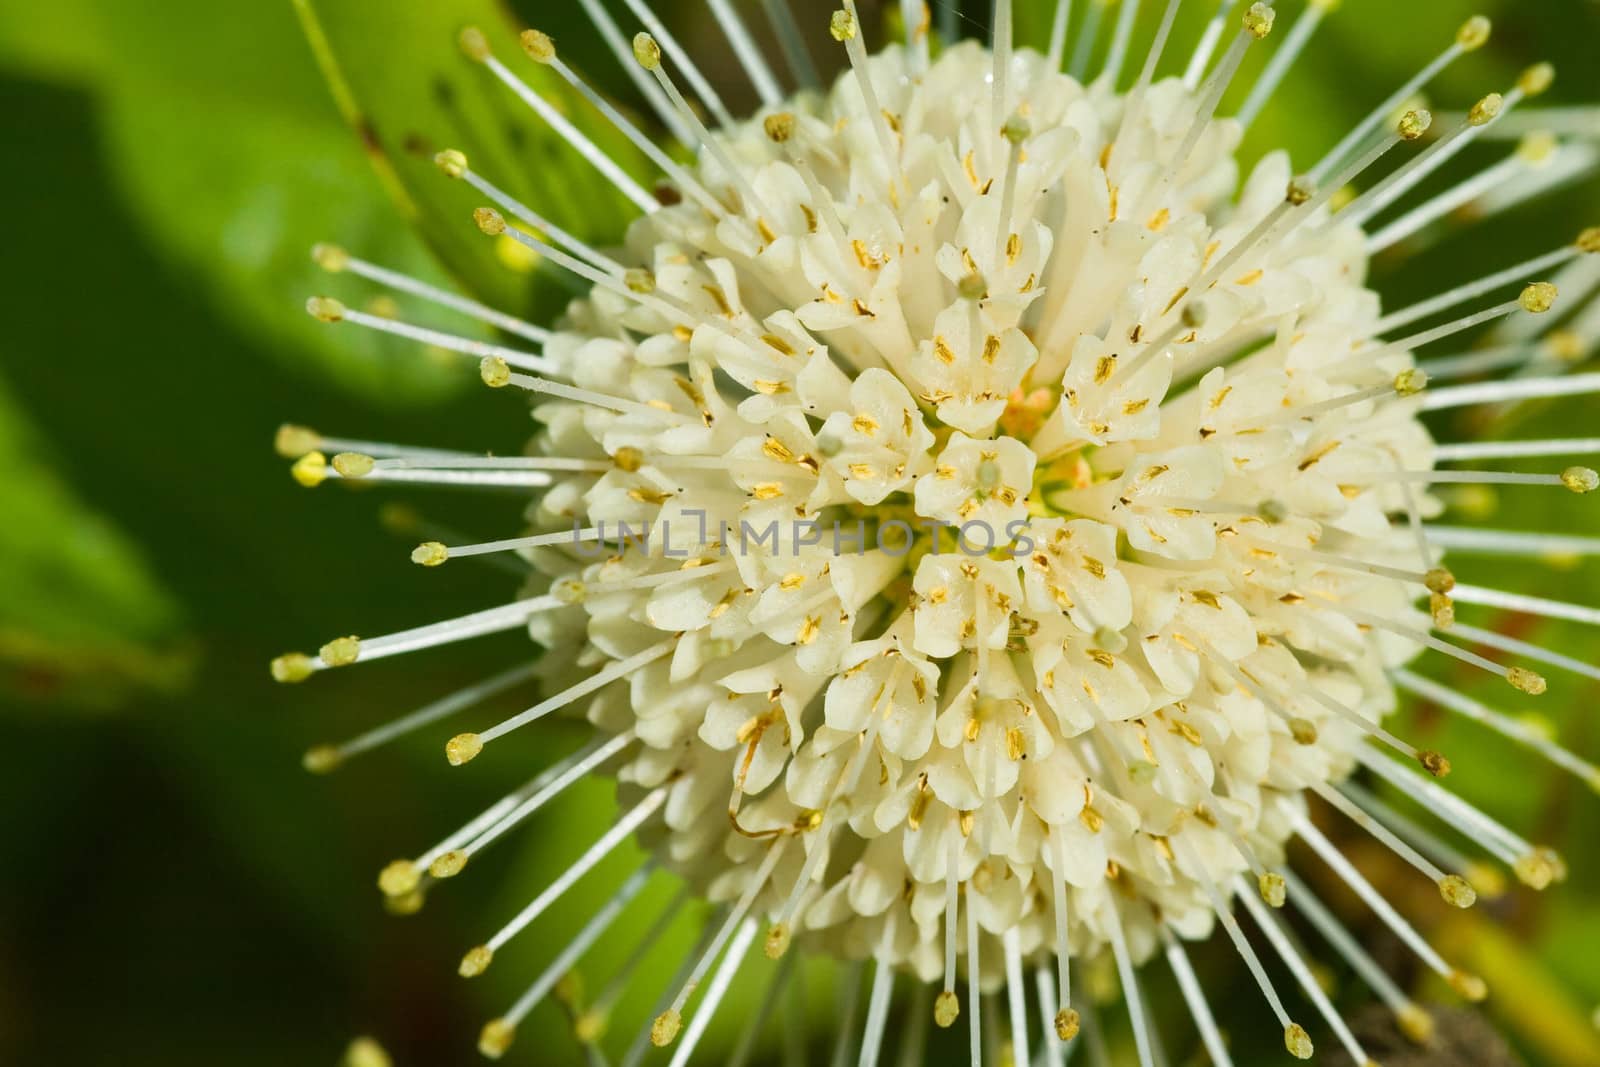 Cephalanthus occidentalis or a Buttonbush flower in Everglades, Florida.